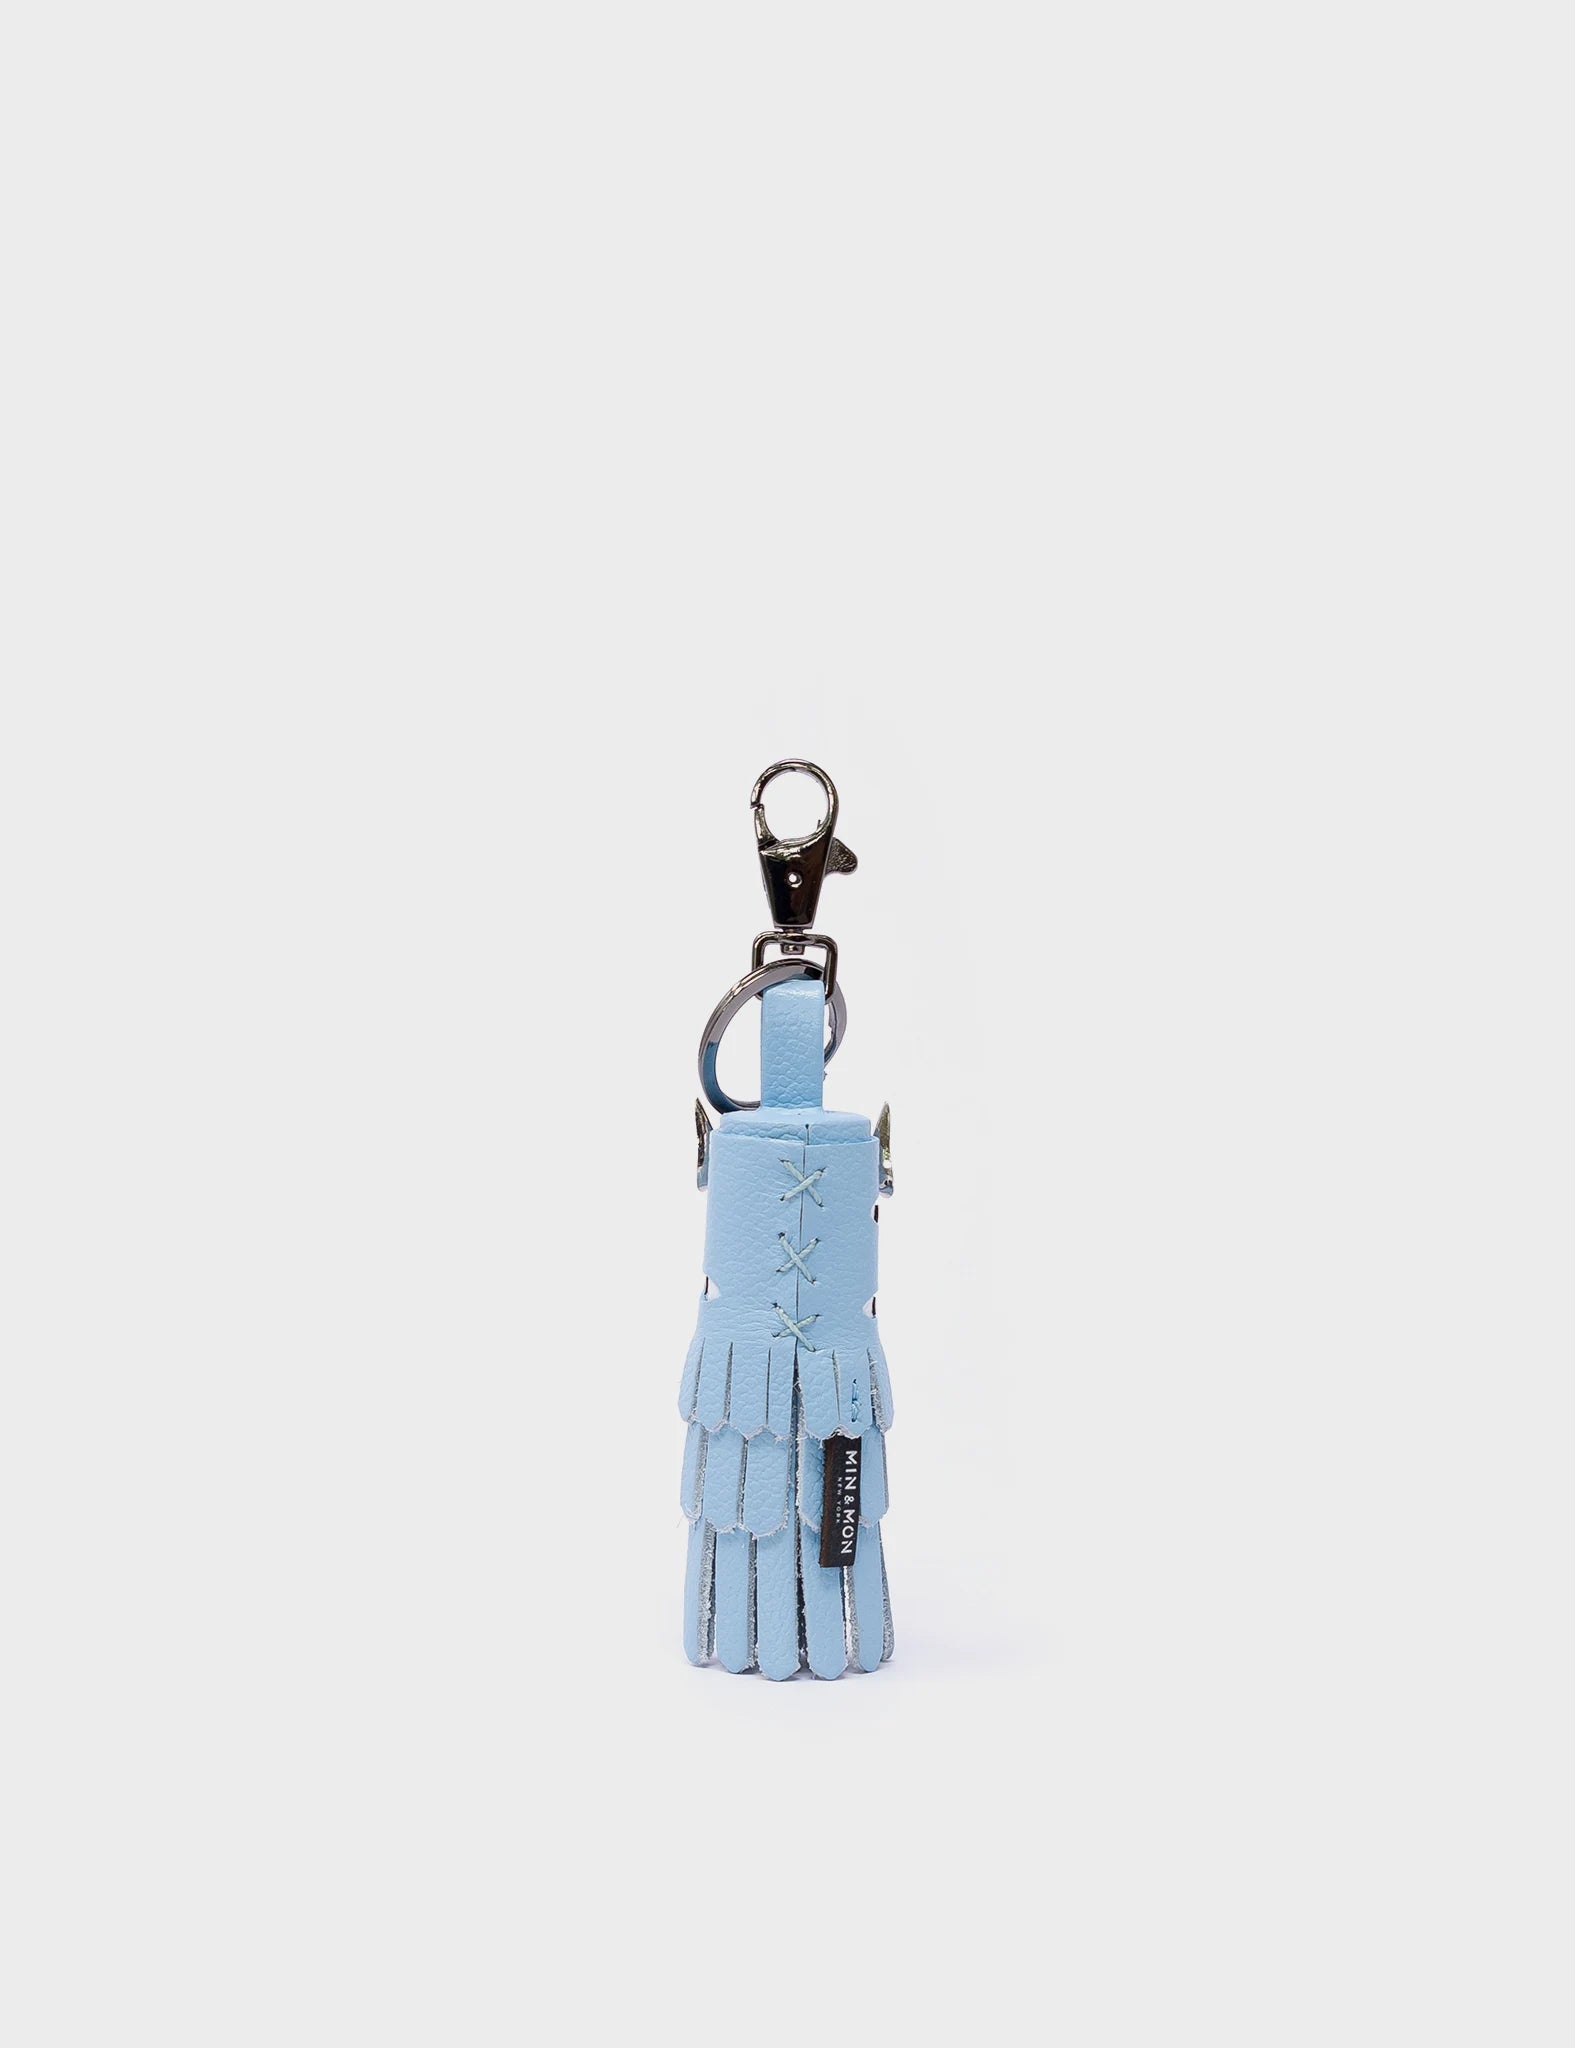 Oliver The Ox Charm - Splish Splash Blue Leather Keychain - Back 